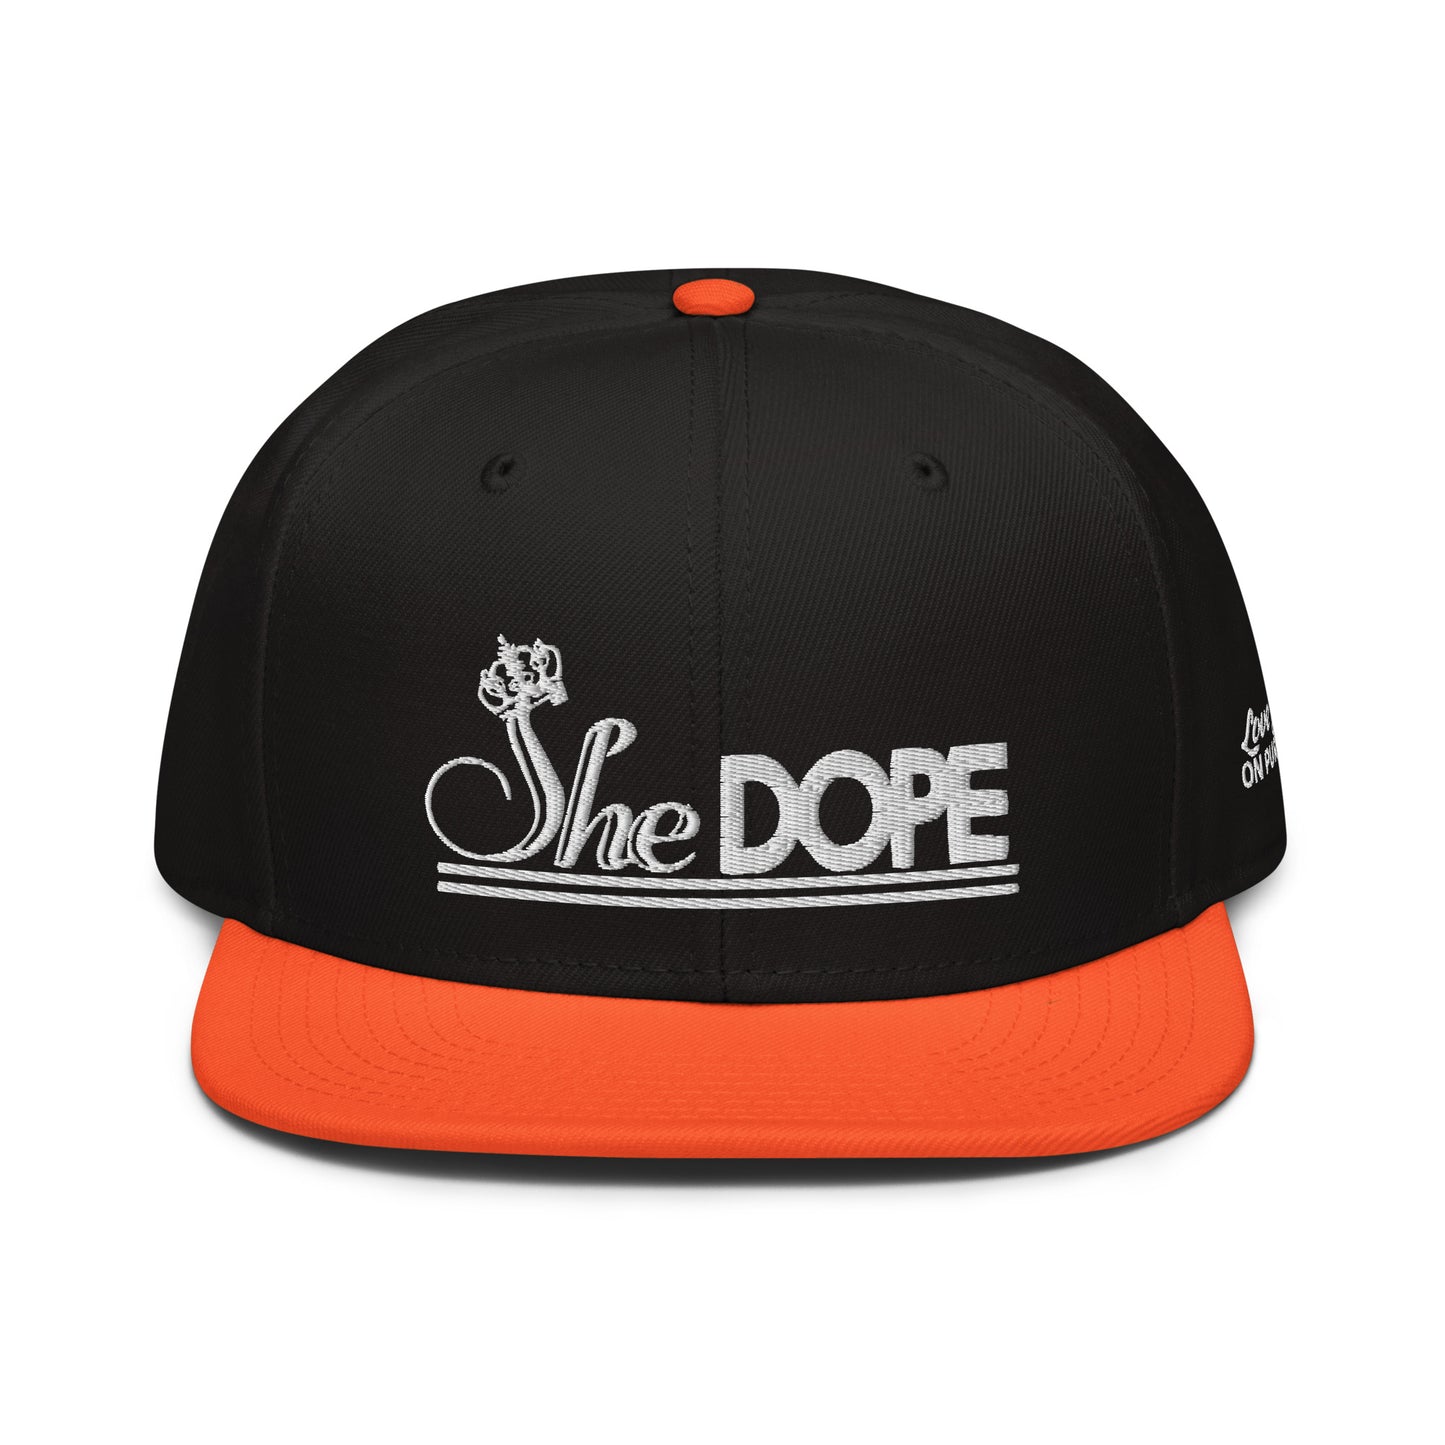 3D SheDope Snapback Hat